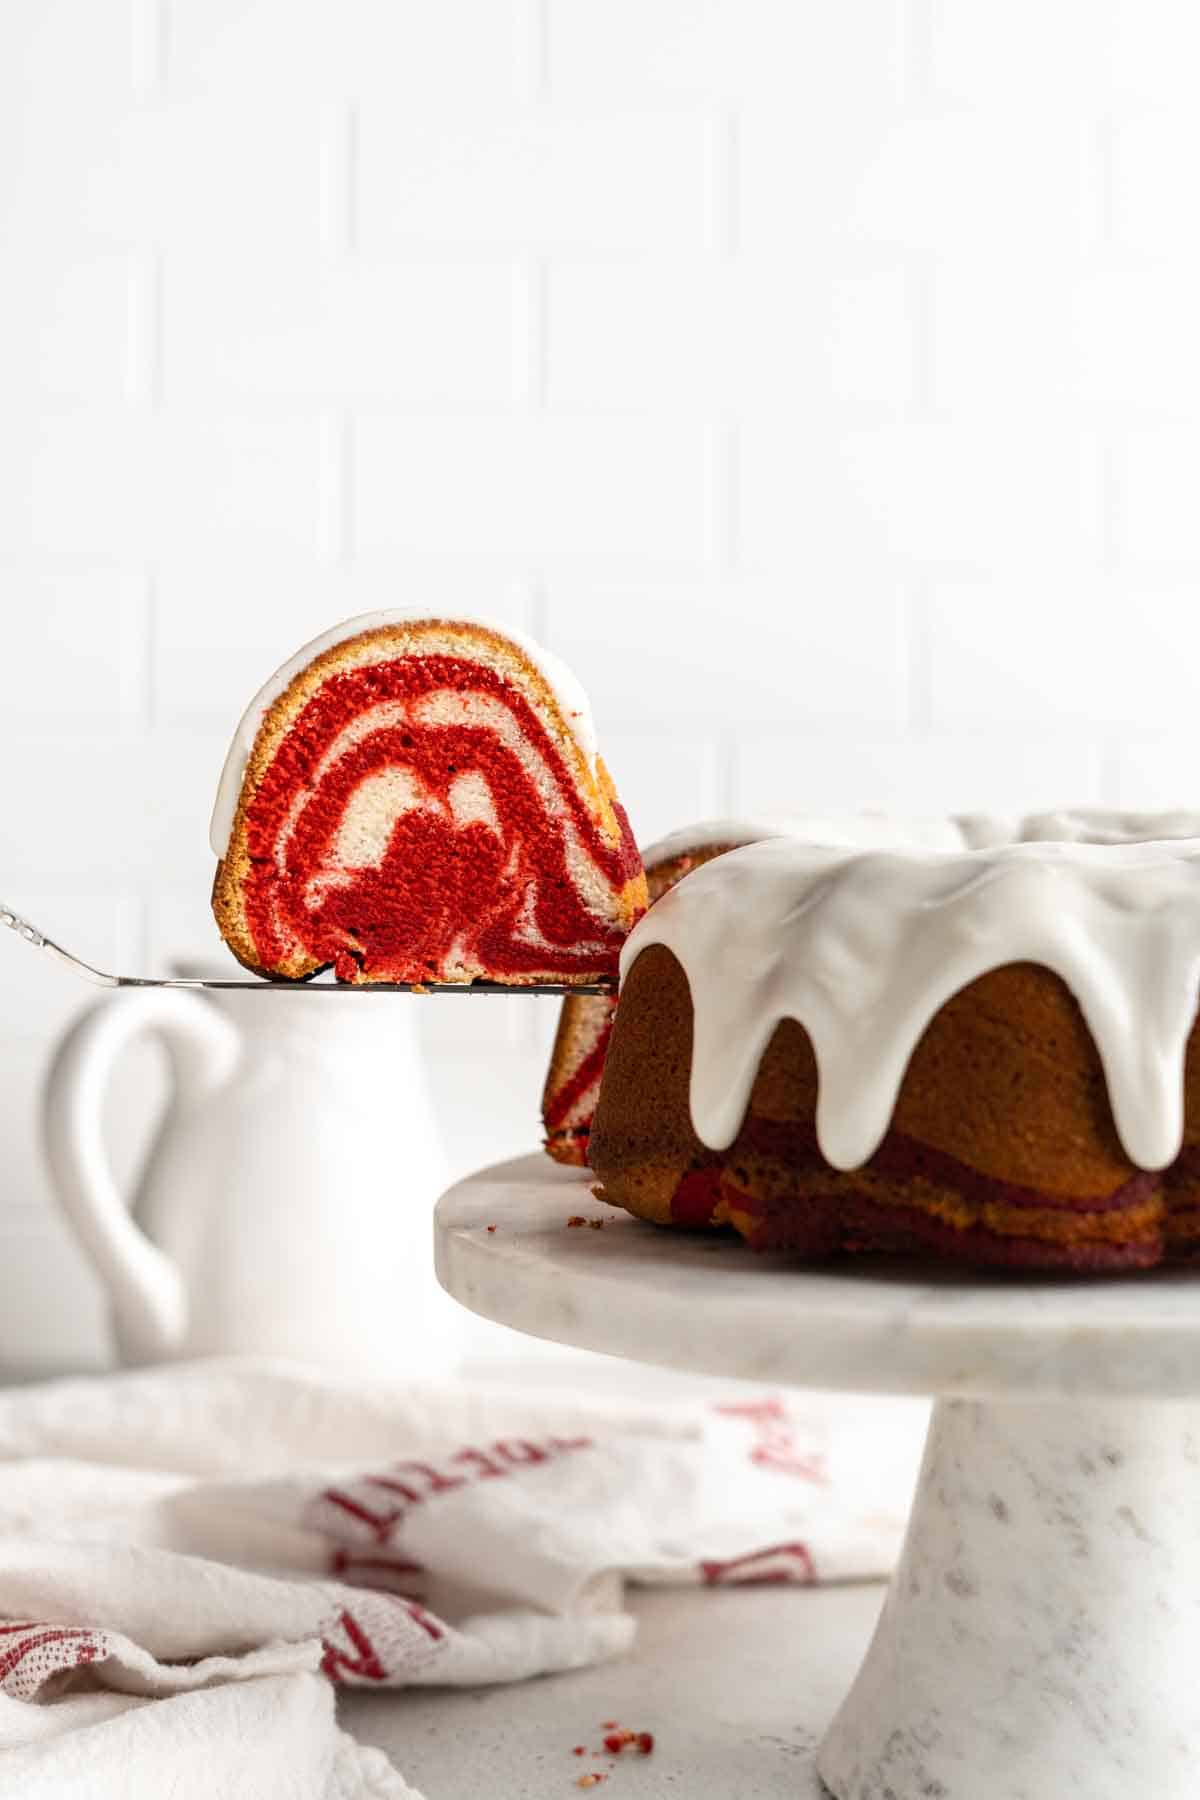 Red Velvet Marble Cake is sliced on white cake stand with white background